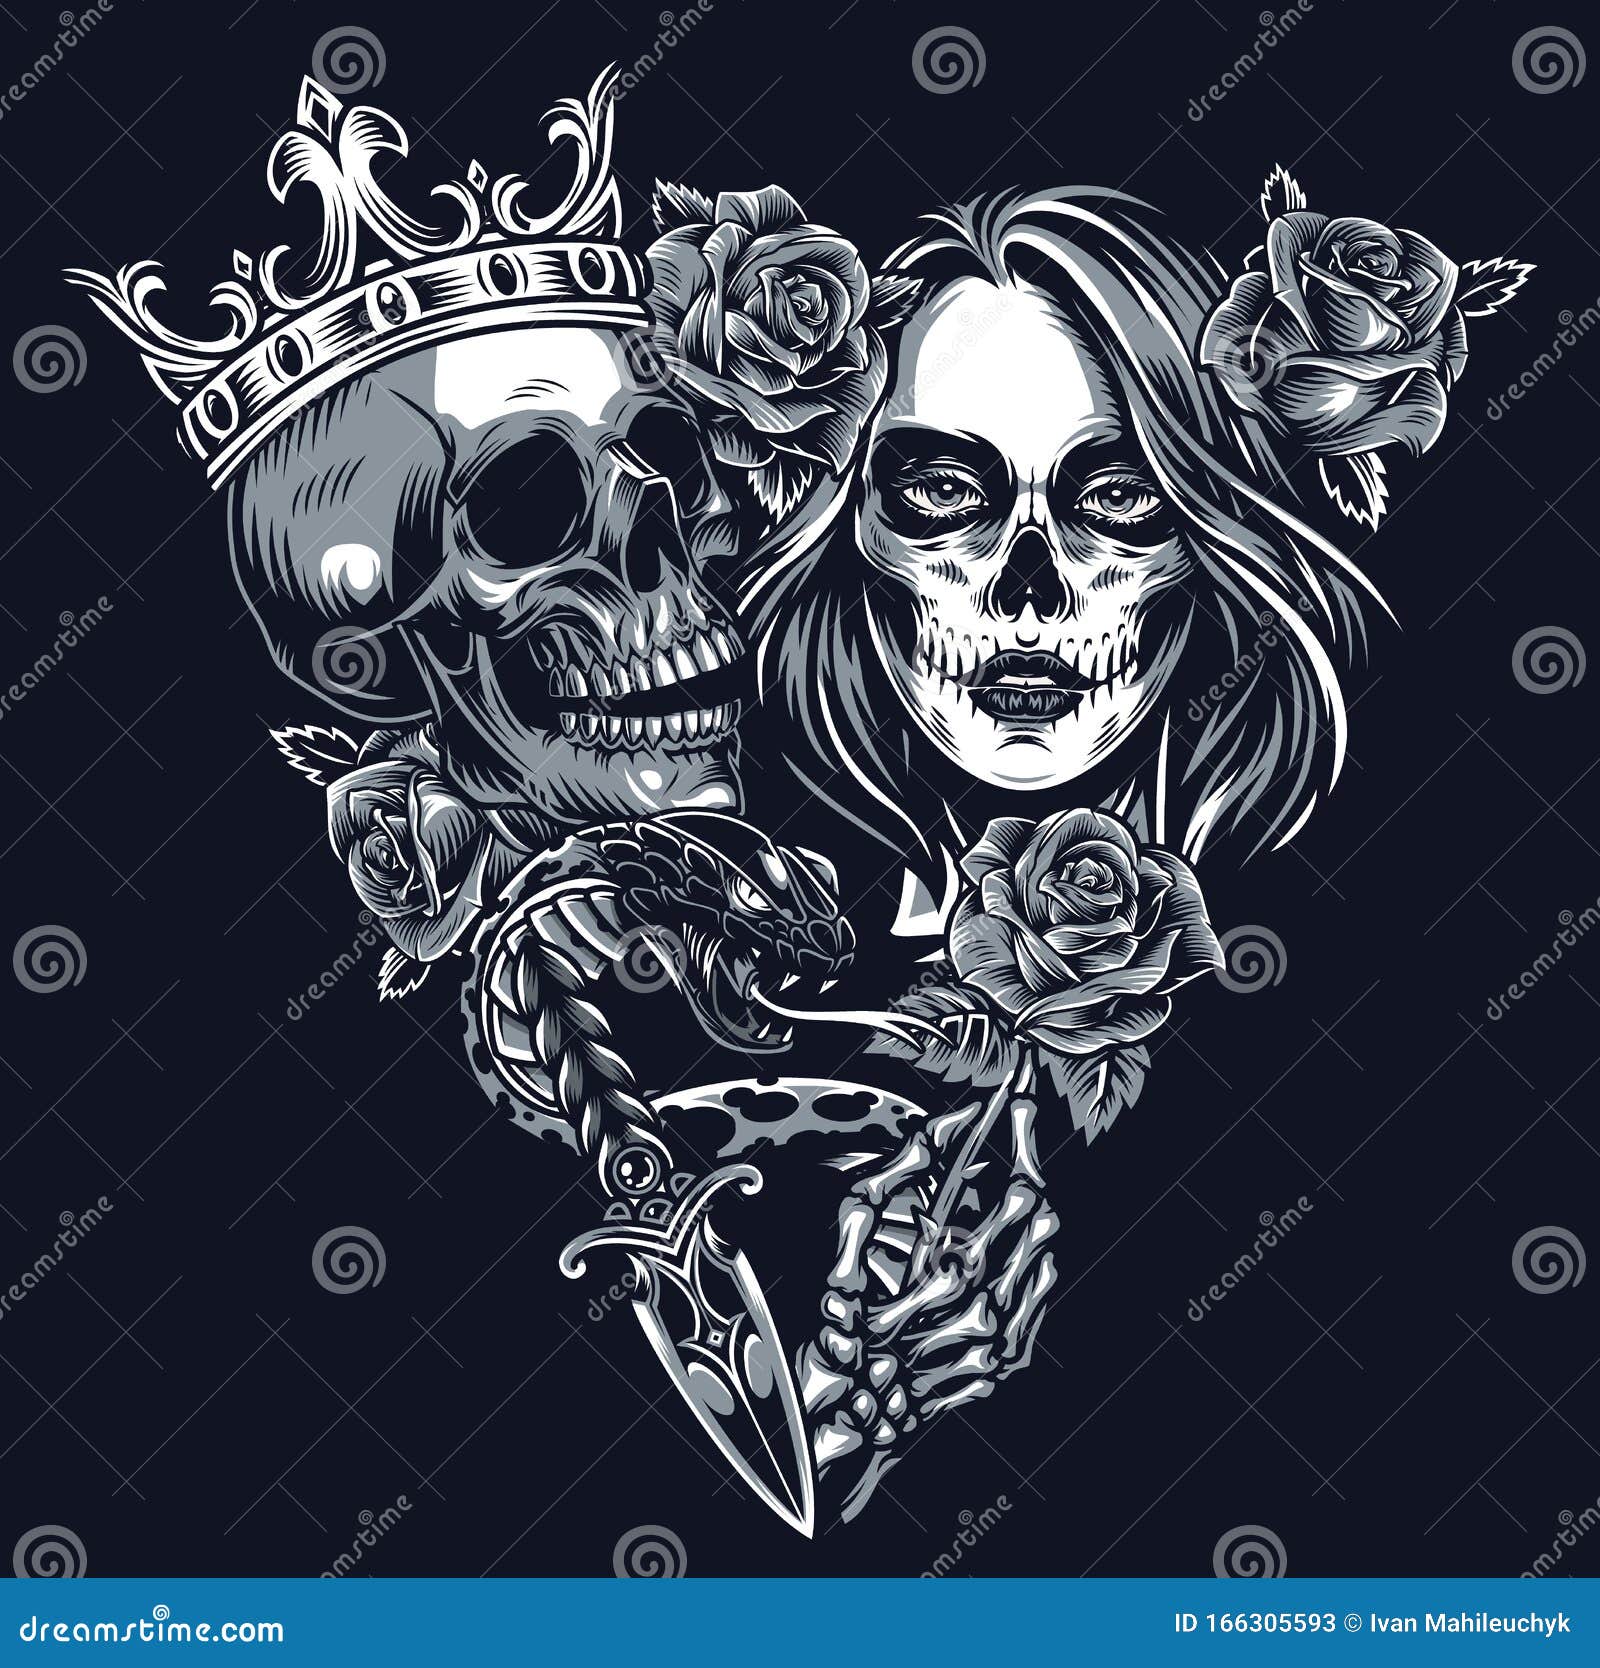 Creepy but astonish ideas for Skull tattoos